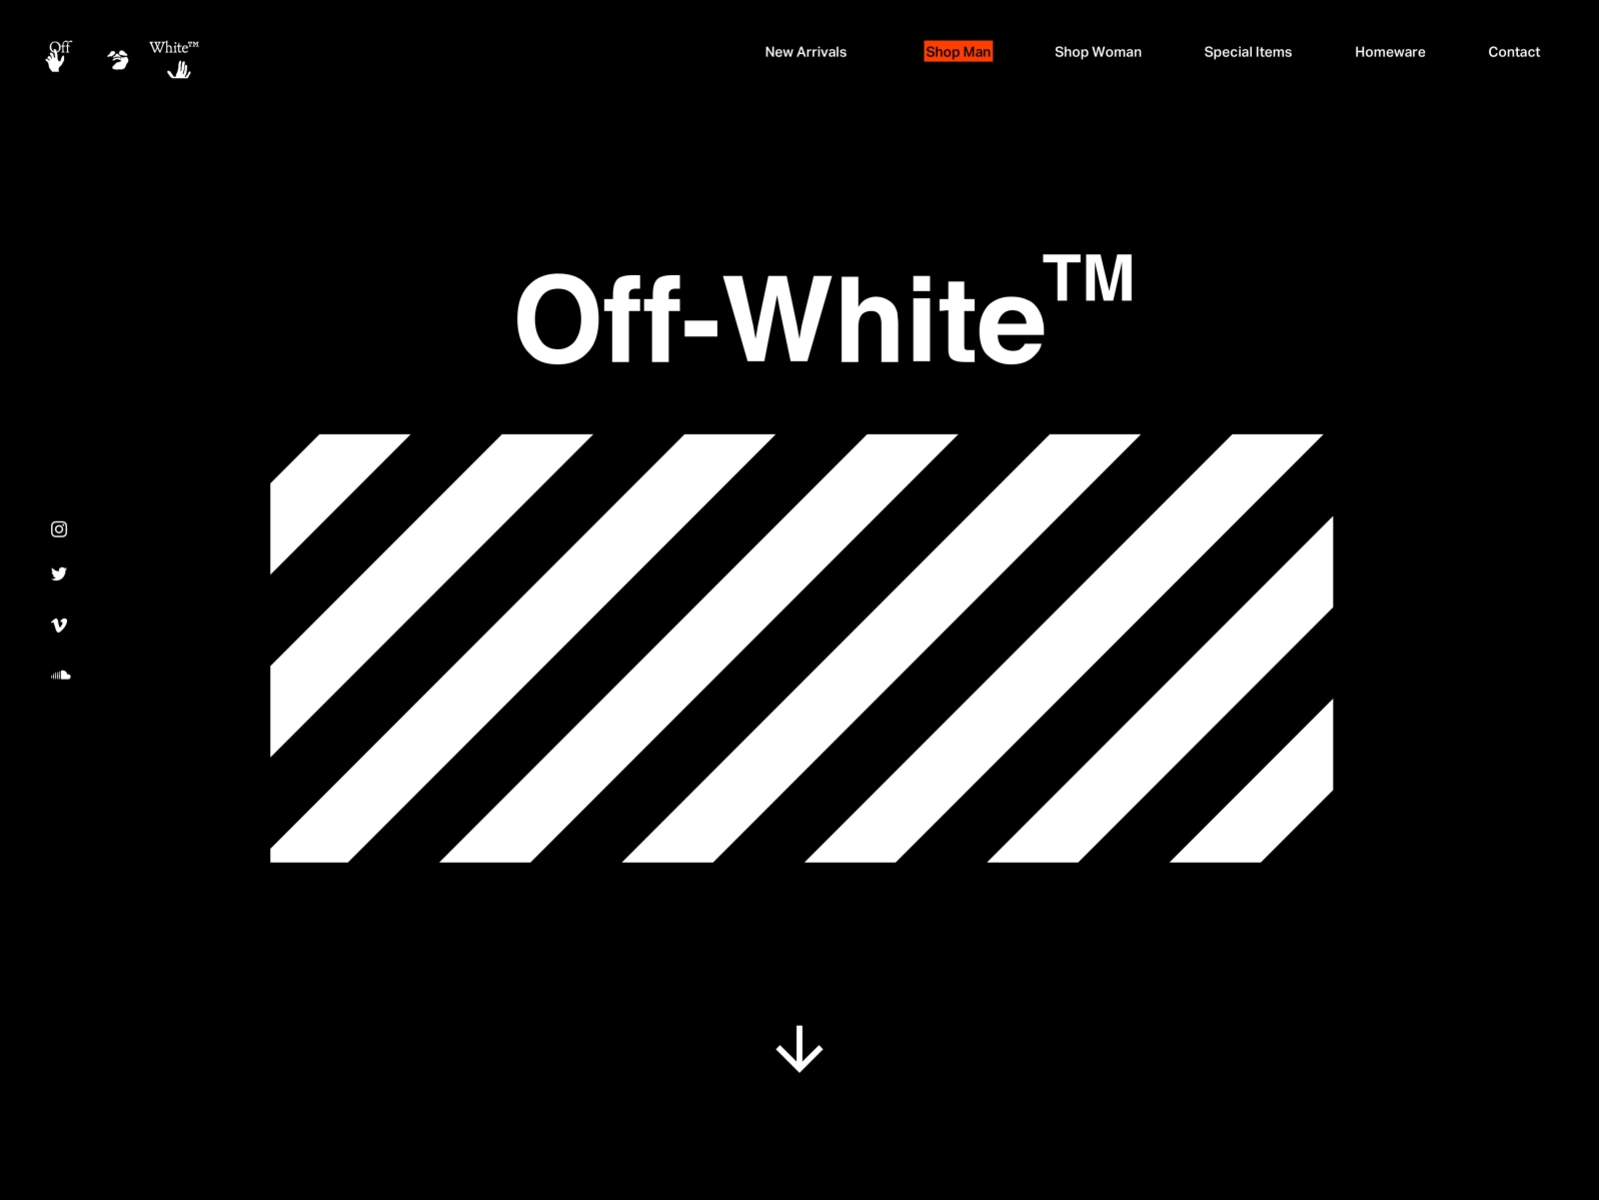 Off White -> Header Variants by Mario Šimić on Dribbble